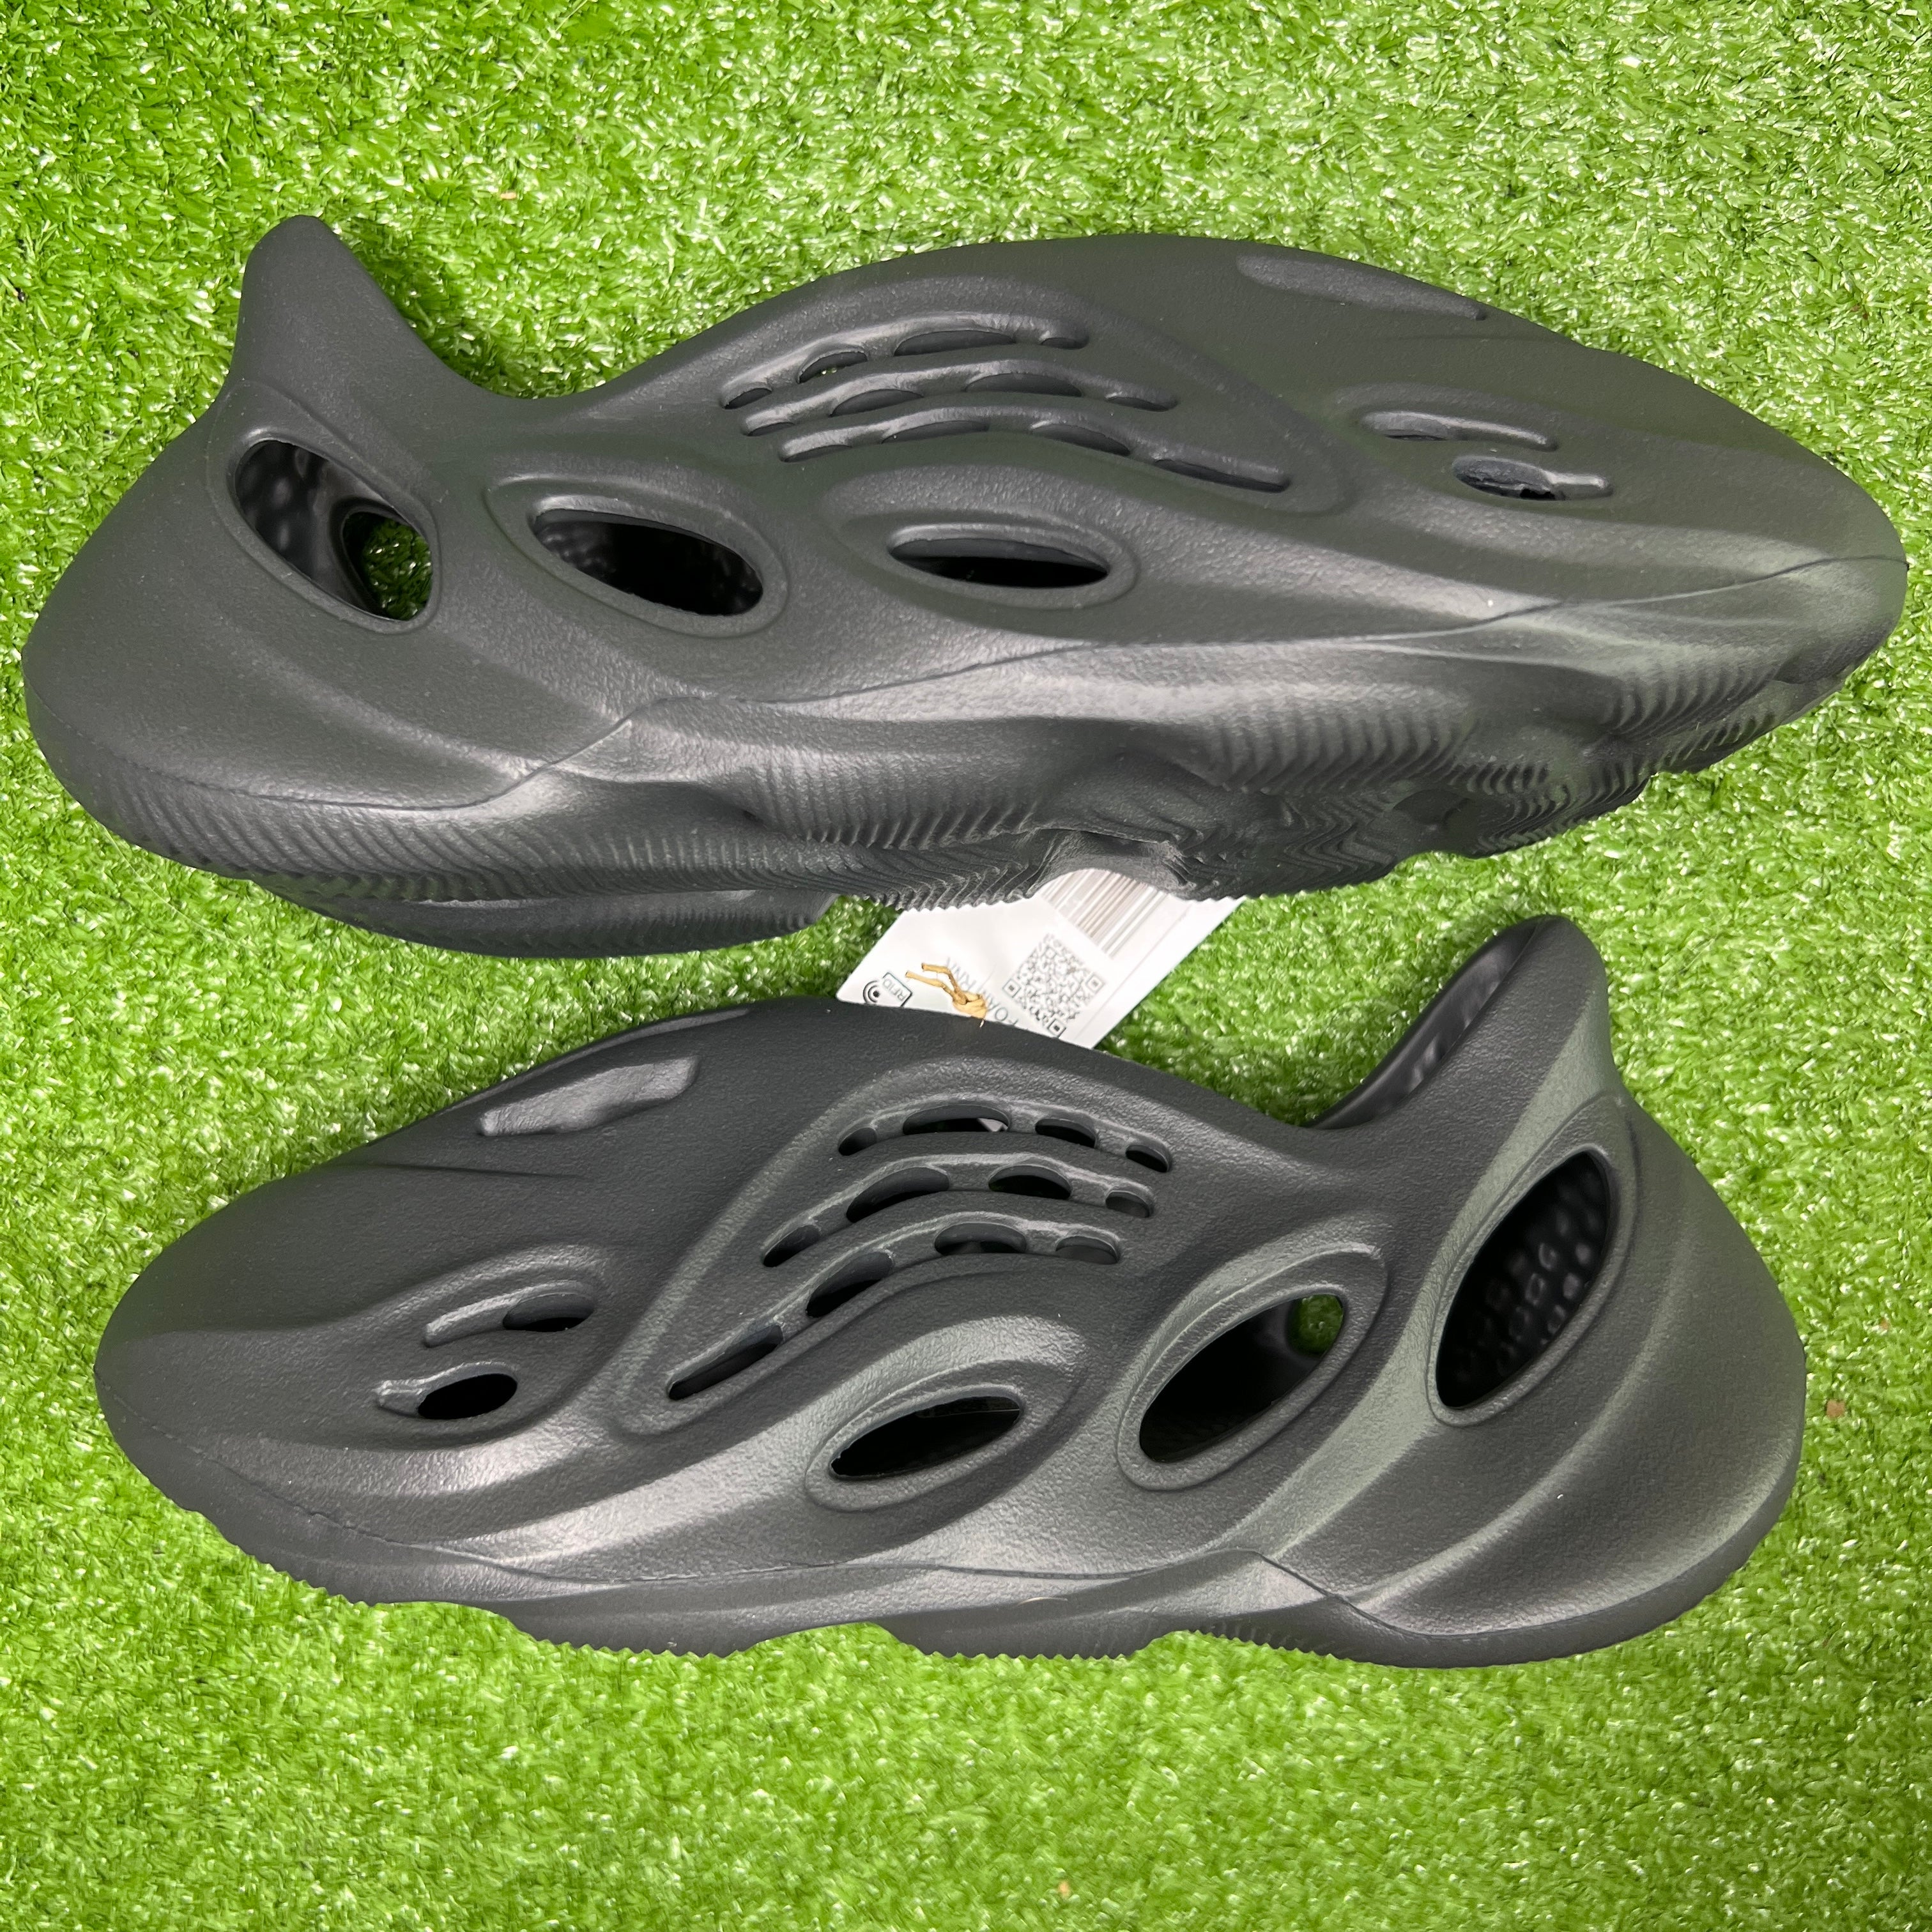 adidas YEEZY Foam Runner Carbon 83％以上節約 - 靴